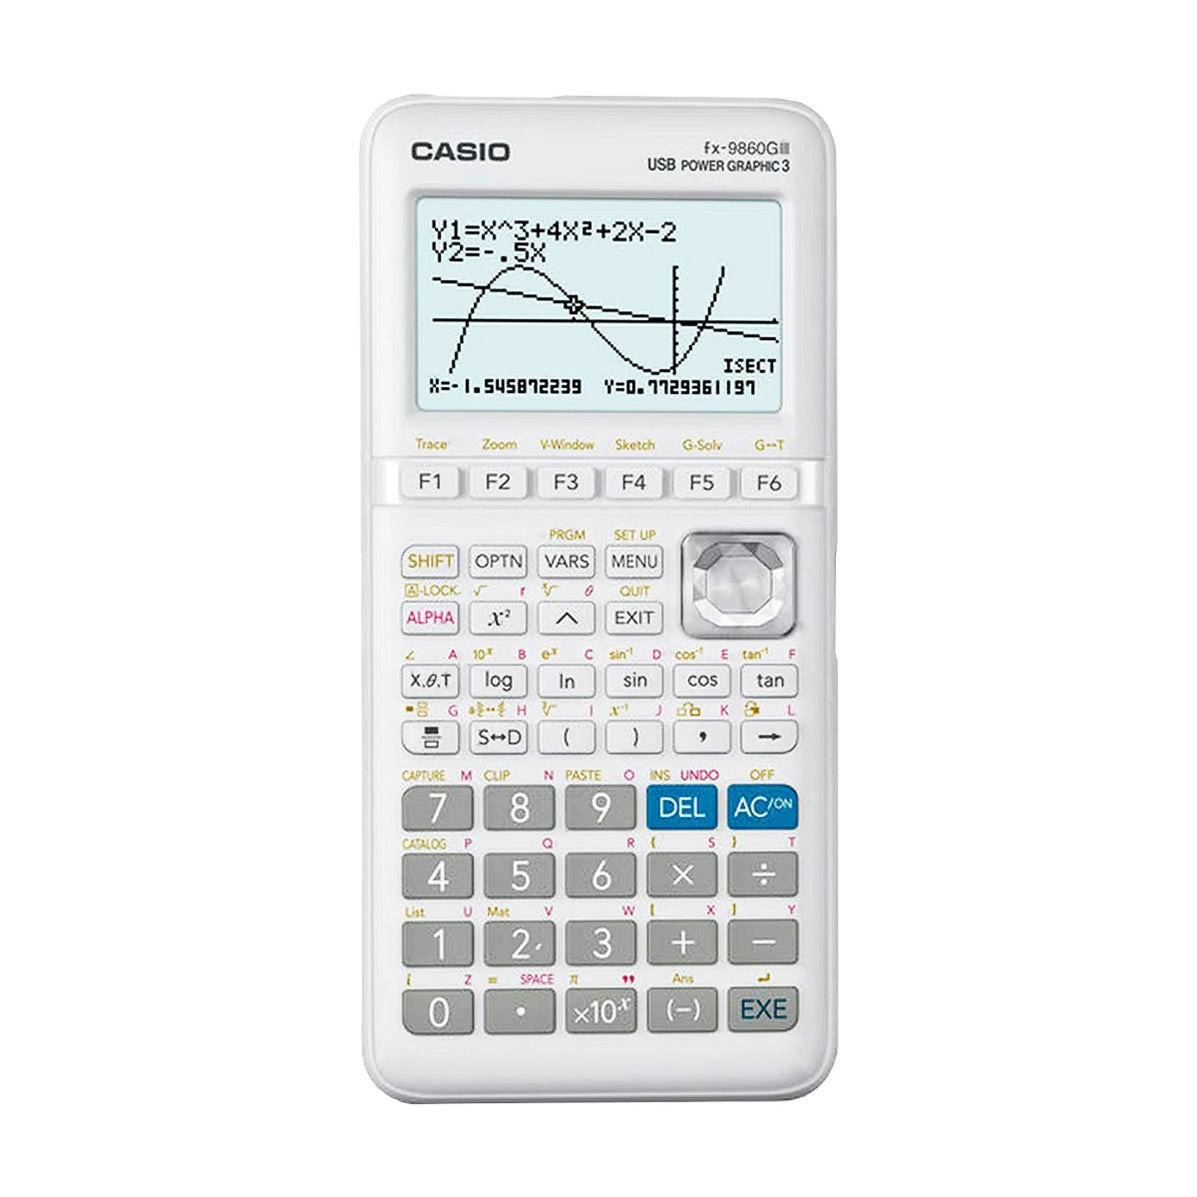 casio engineering calculator price